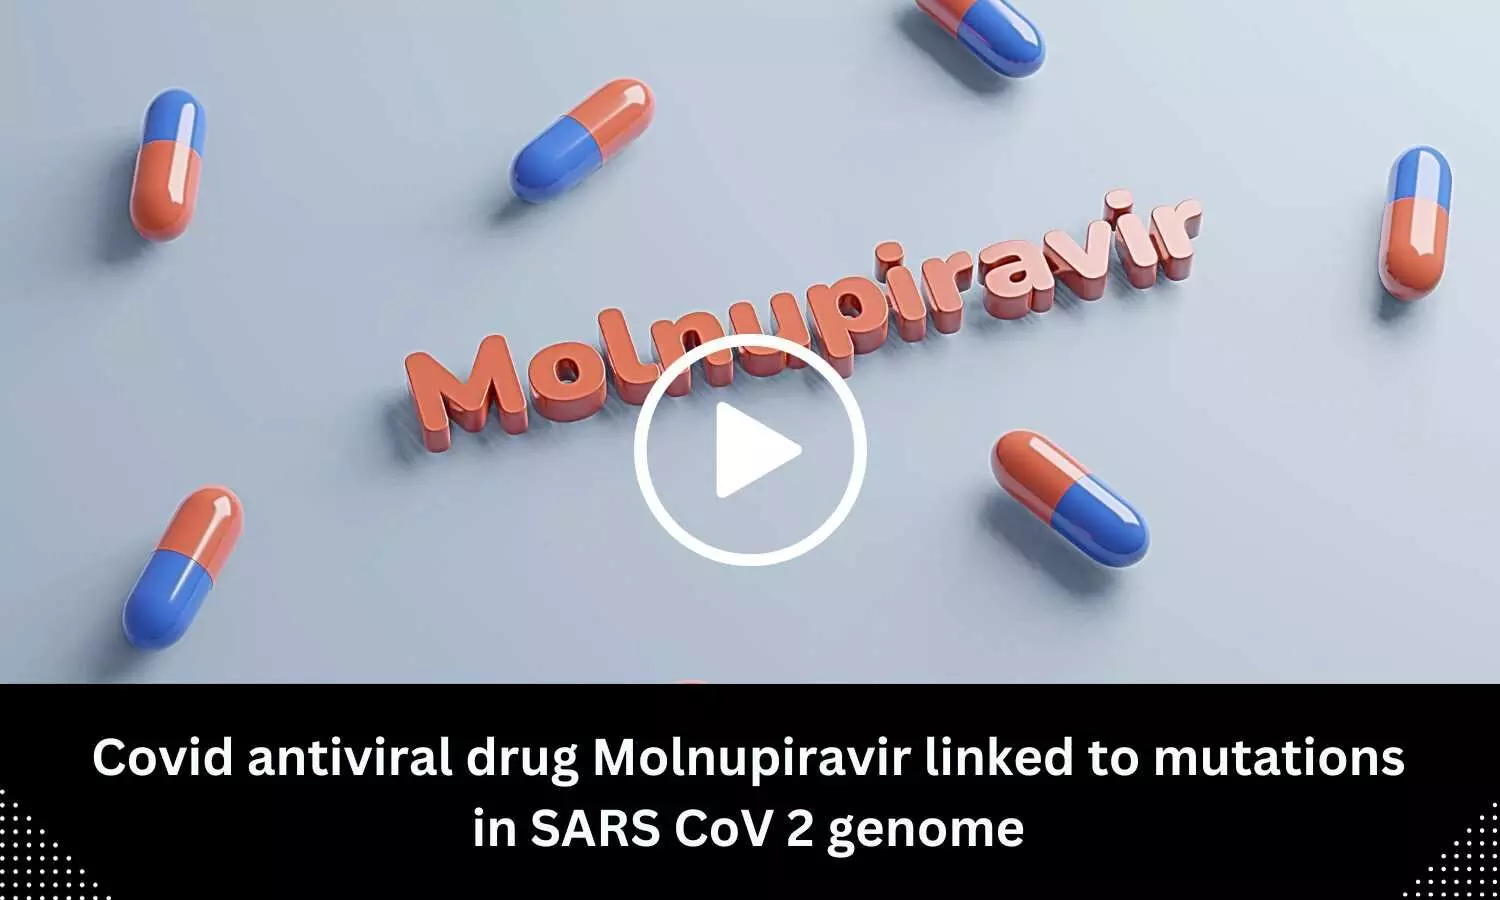 Covid antiviral drug Molnupiravir linked to mutations in SARS CoV 2 genome